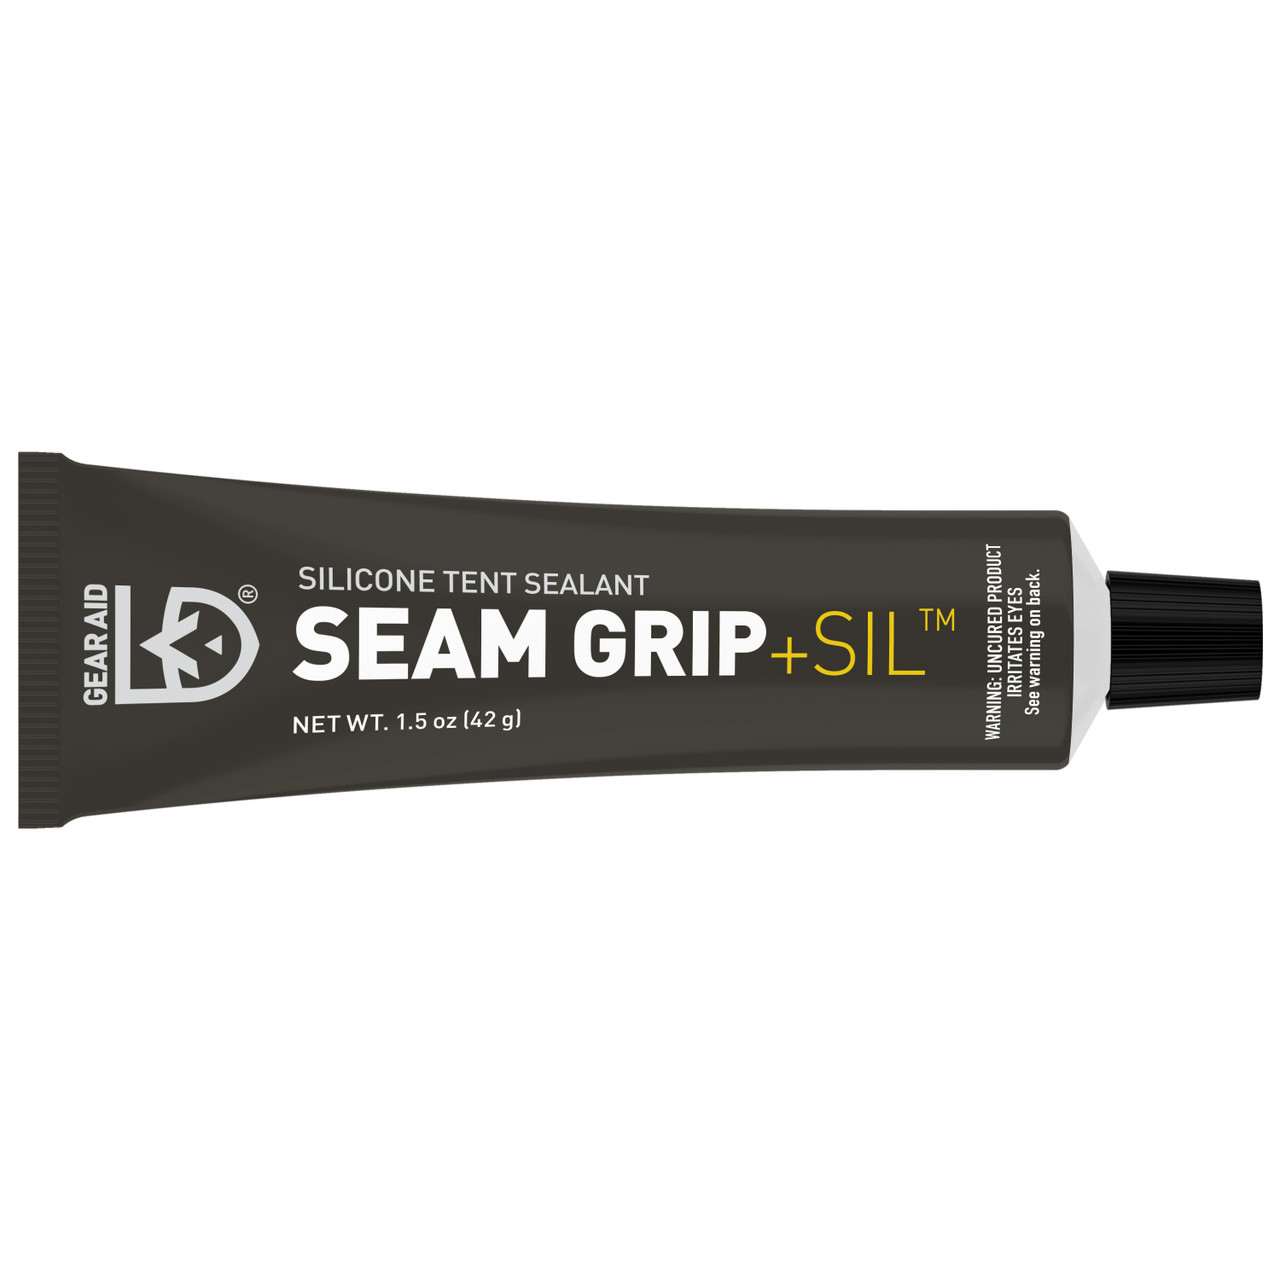 Scellant pour tentes au silicone Seam Grip+Sil NO_COLOUR